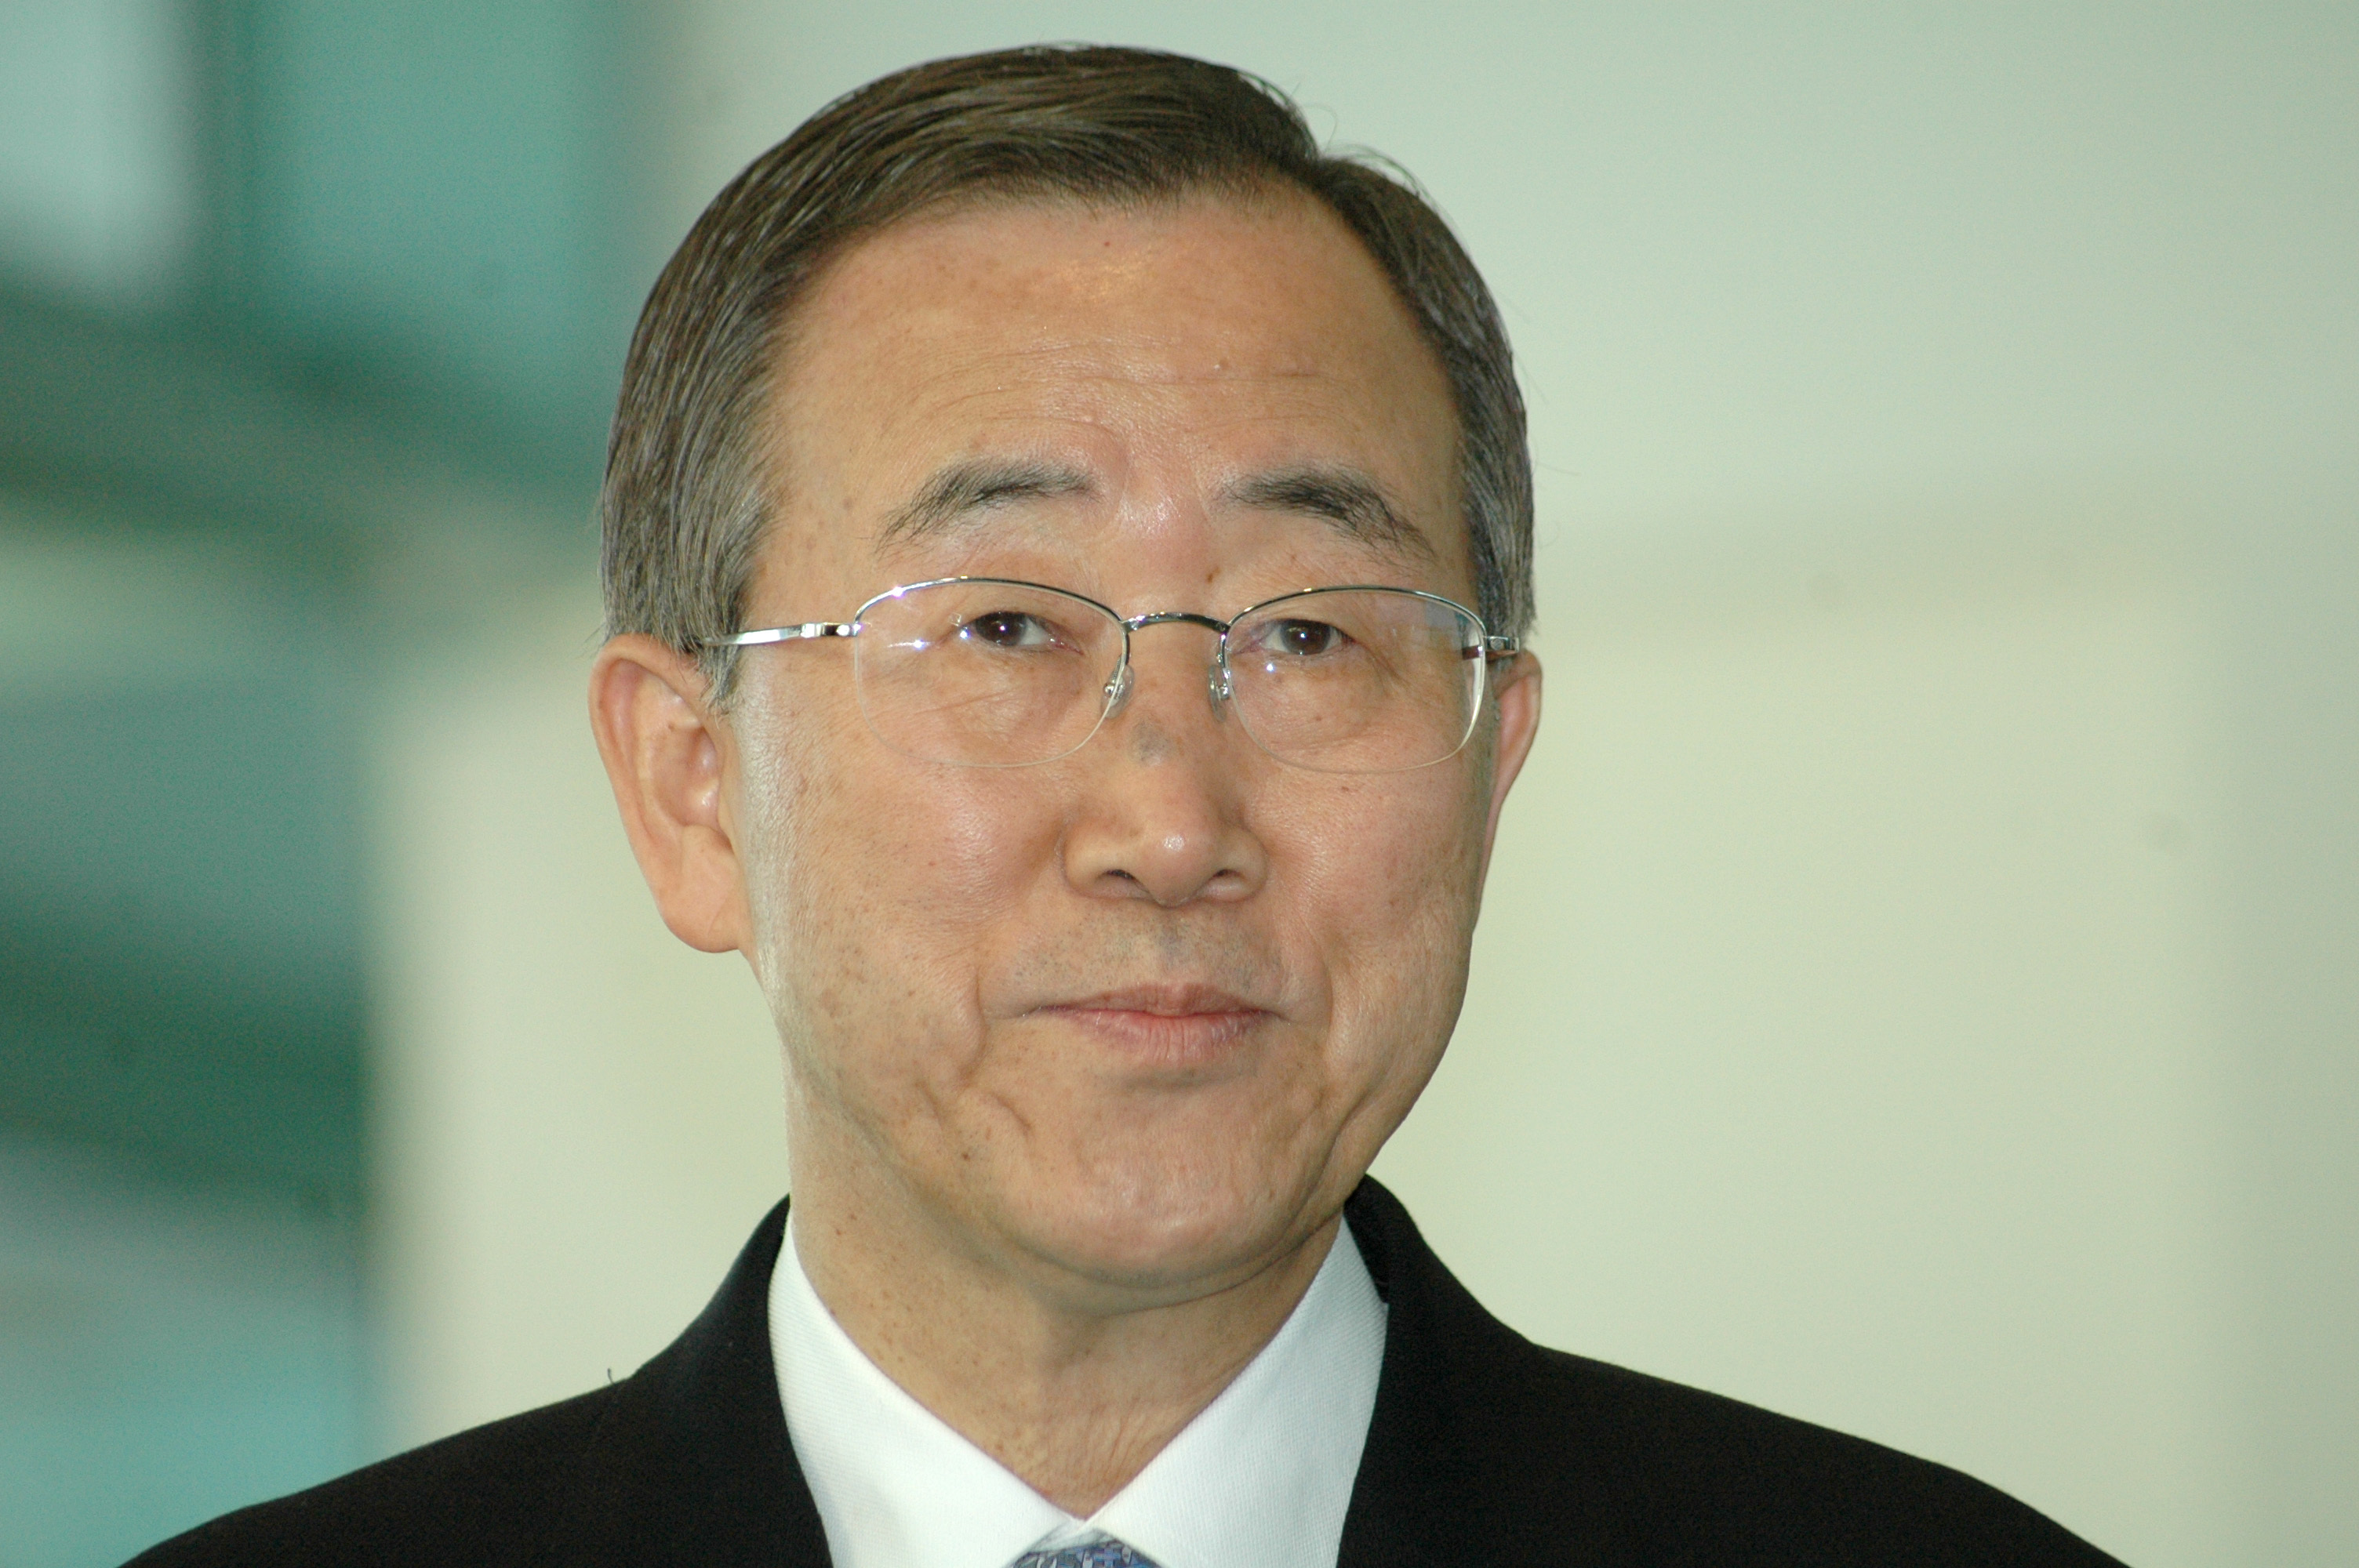 Headshot photo of Ban Ki-Moon, Secretary General of the United Nations